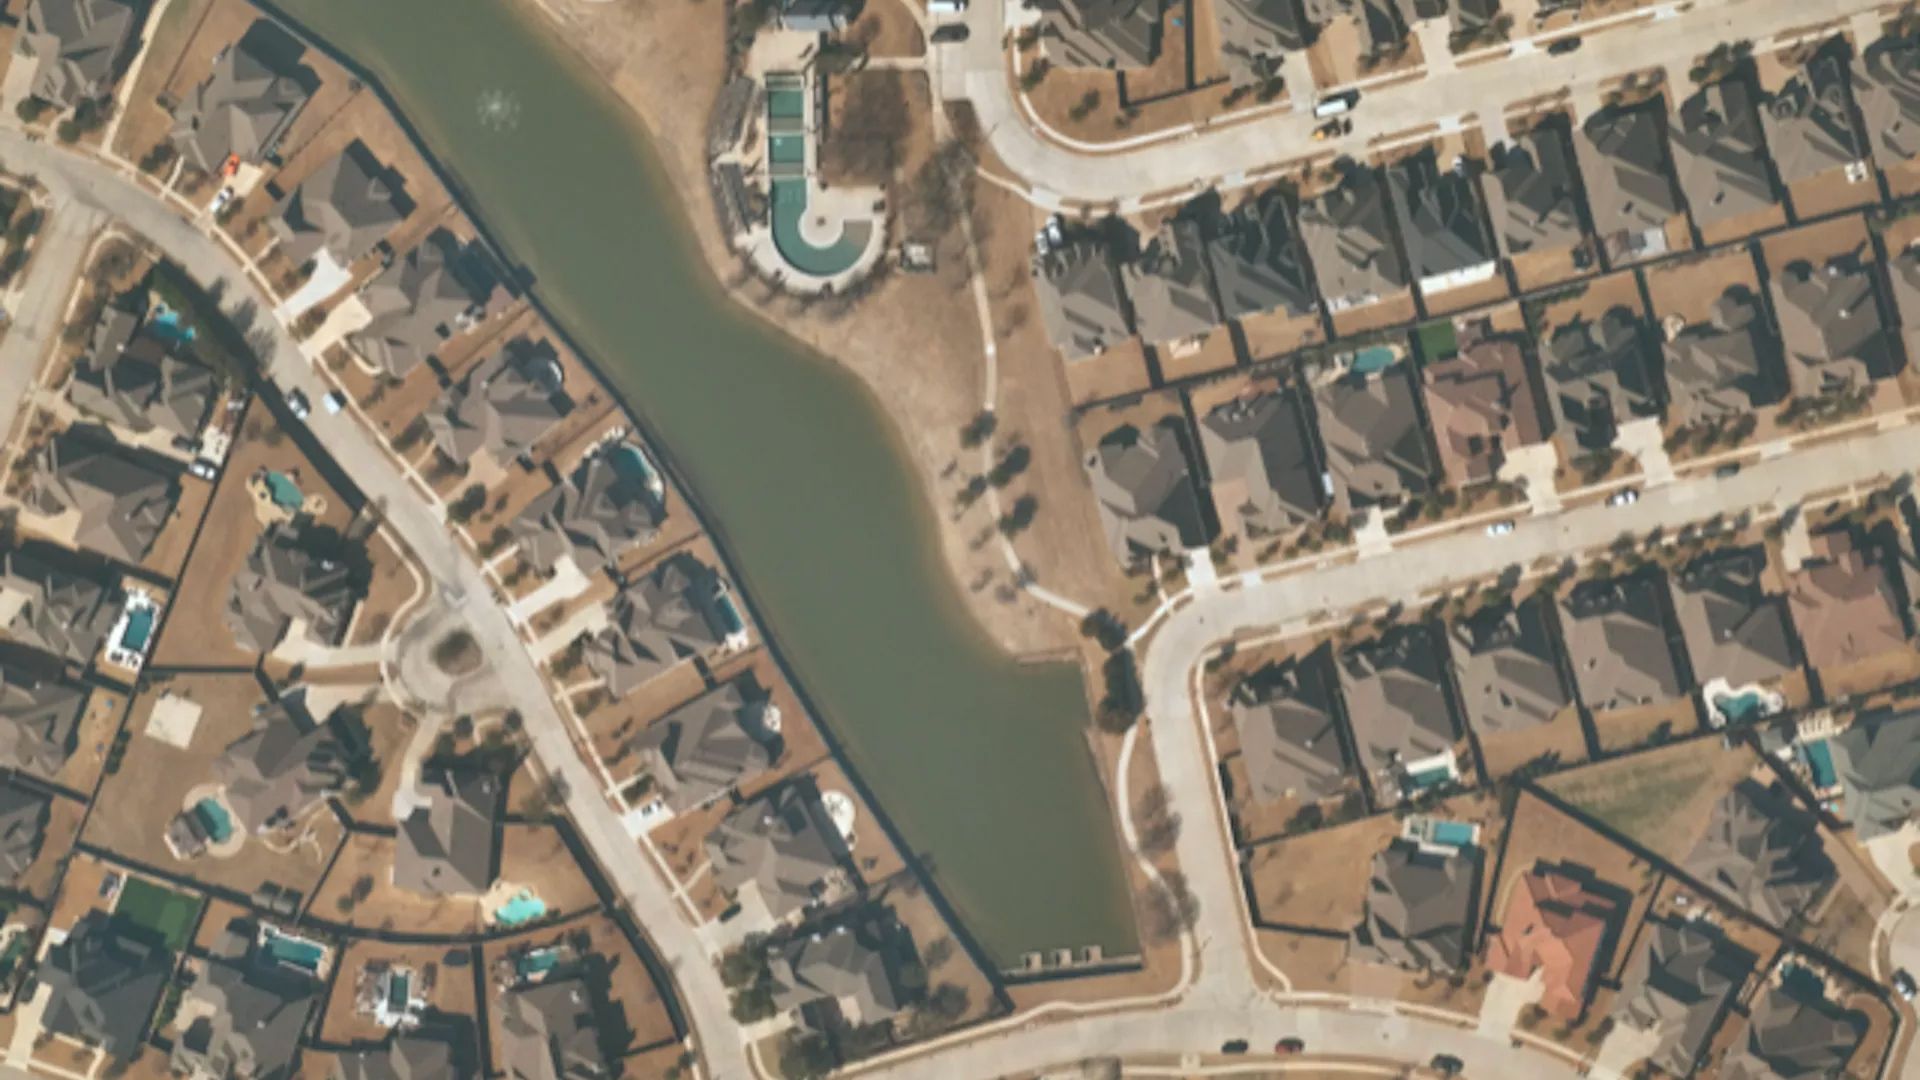 Drone photo of a neighborhood surrounding a lake.